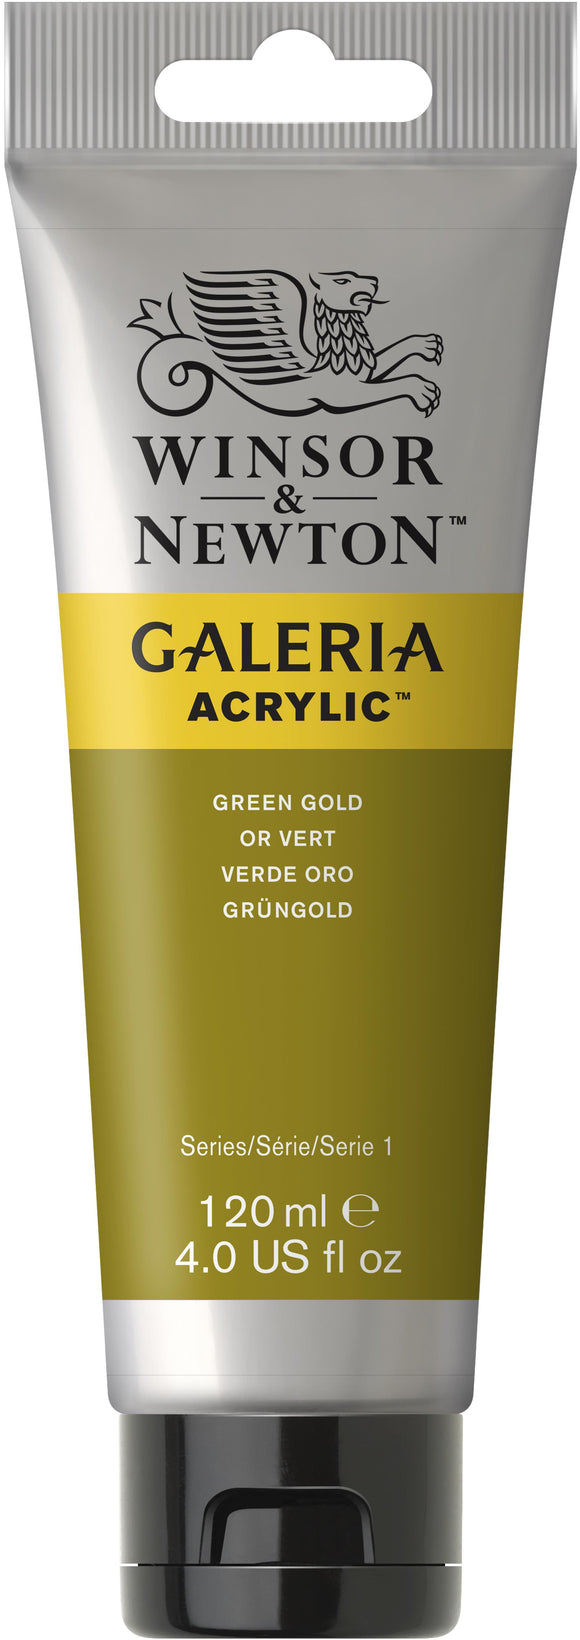 Winsor & Newton Galeria Acrylic Green Gold 120Ml